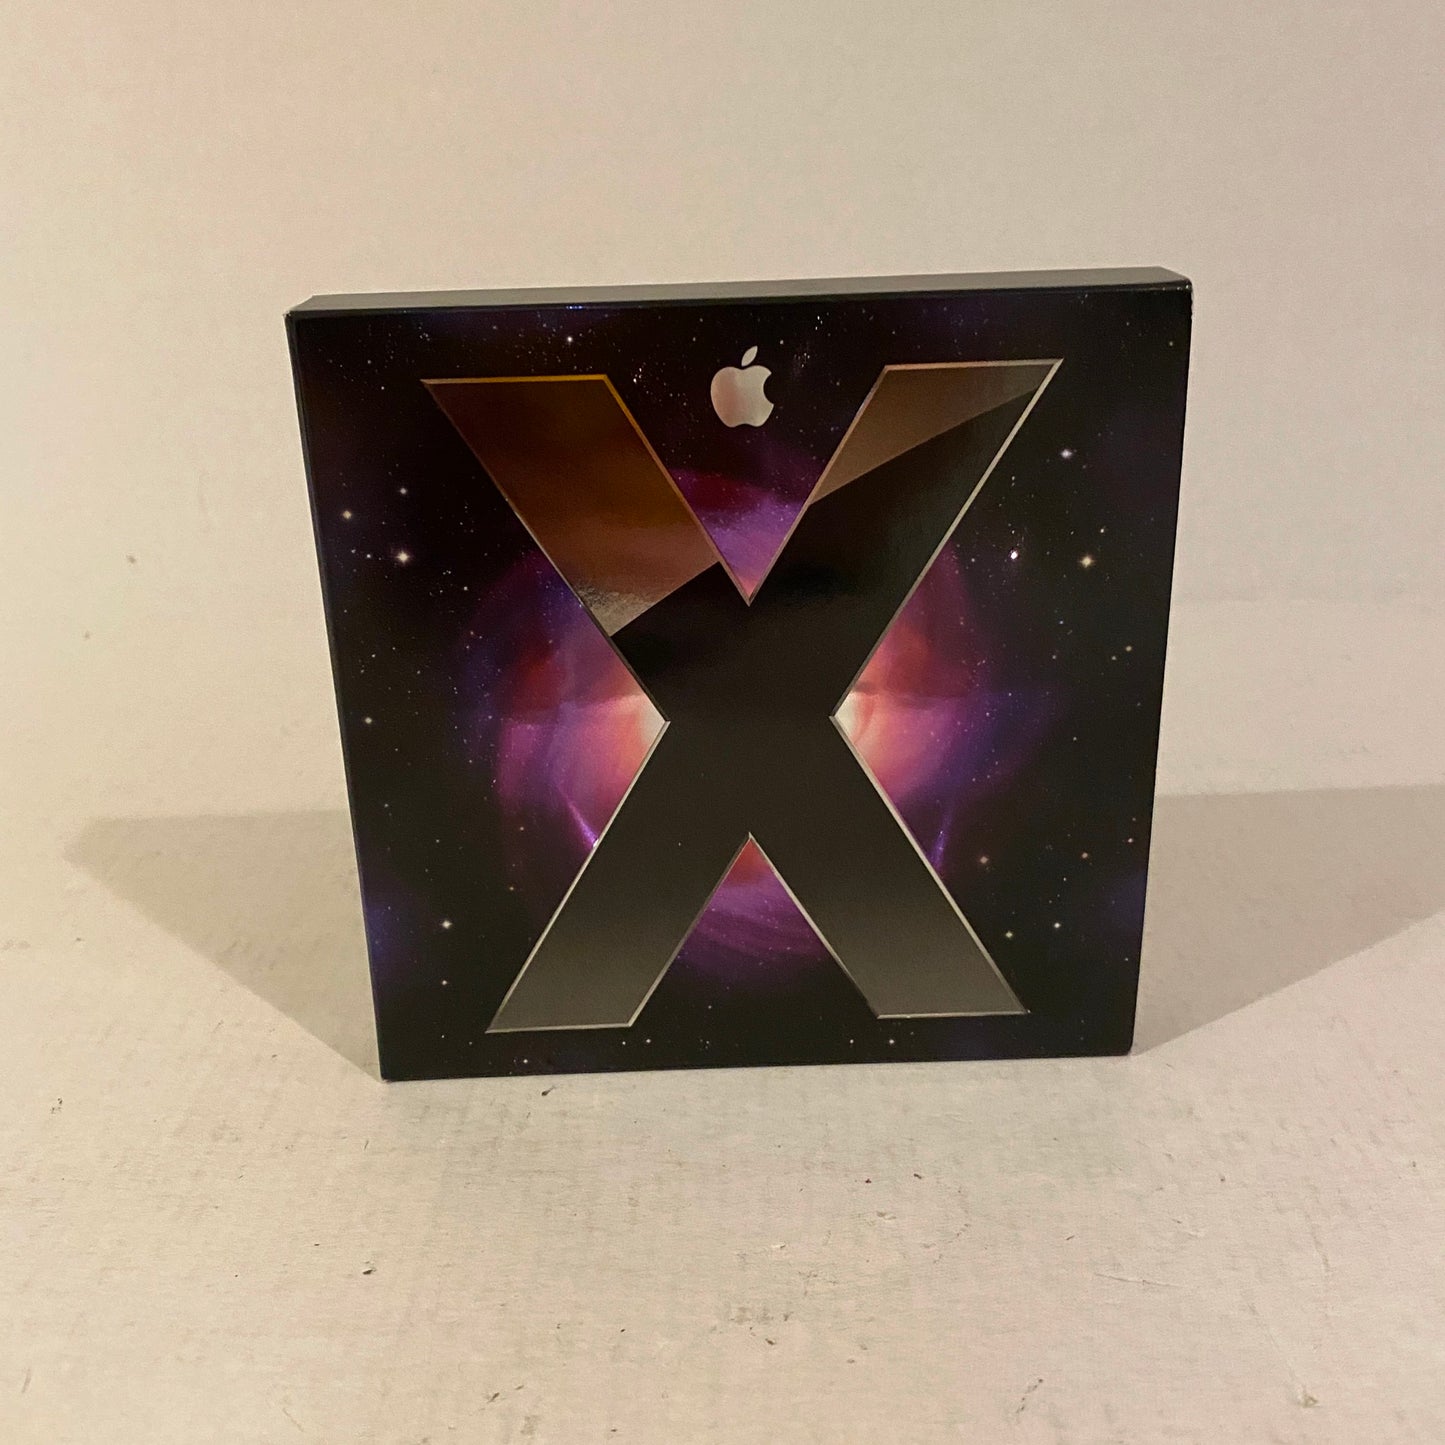 Vintage Apple OSX Leopard Install DVD